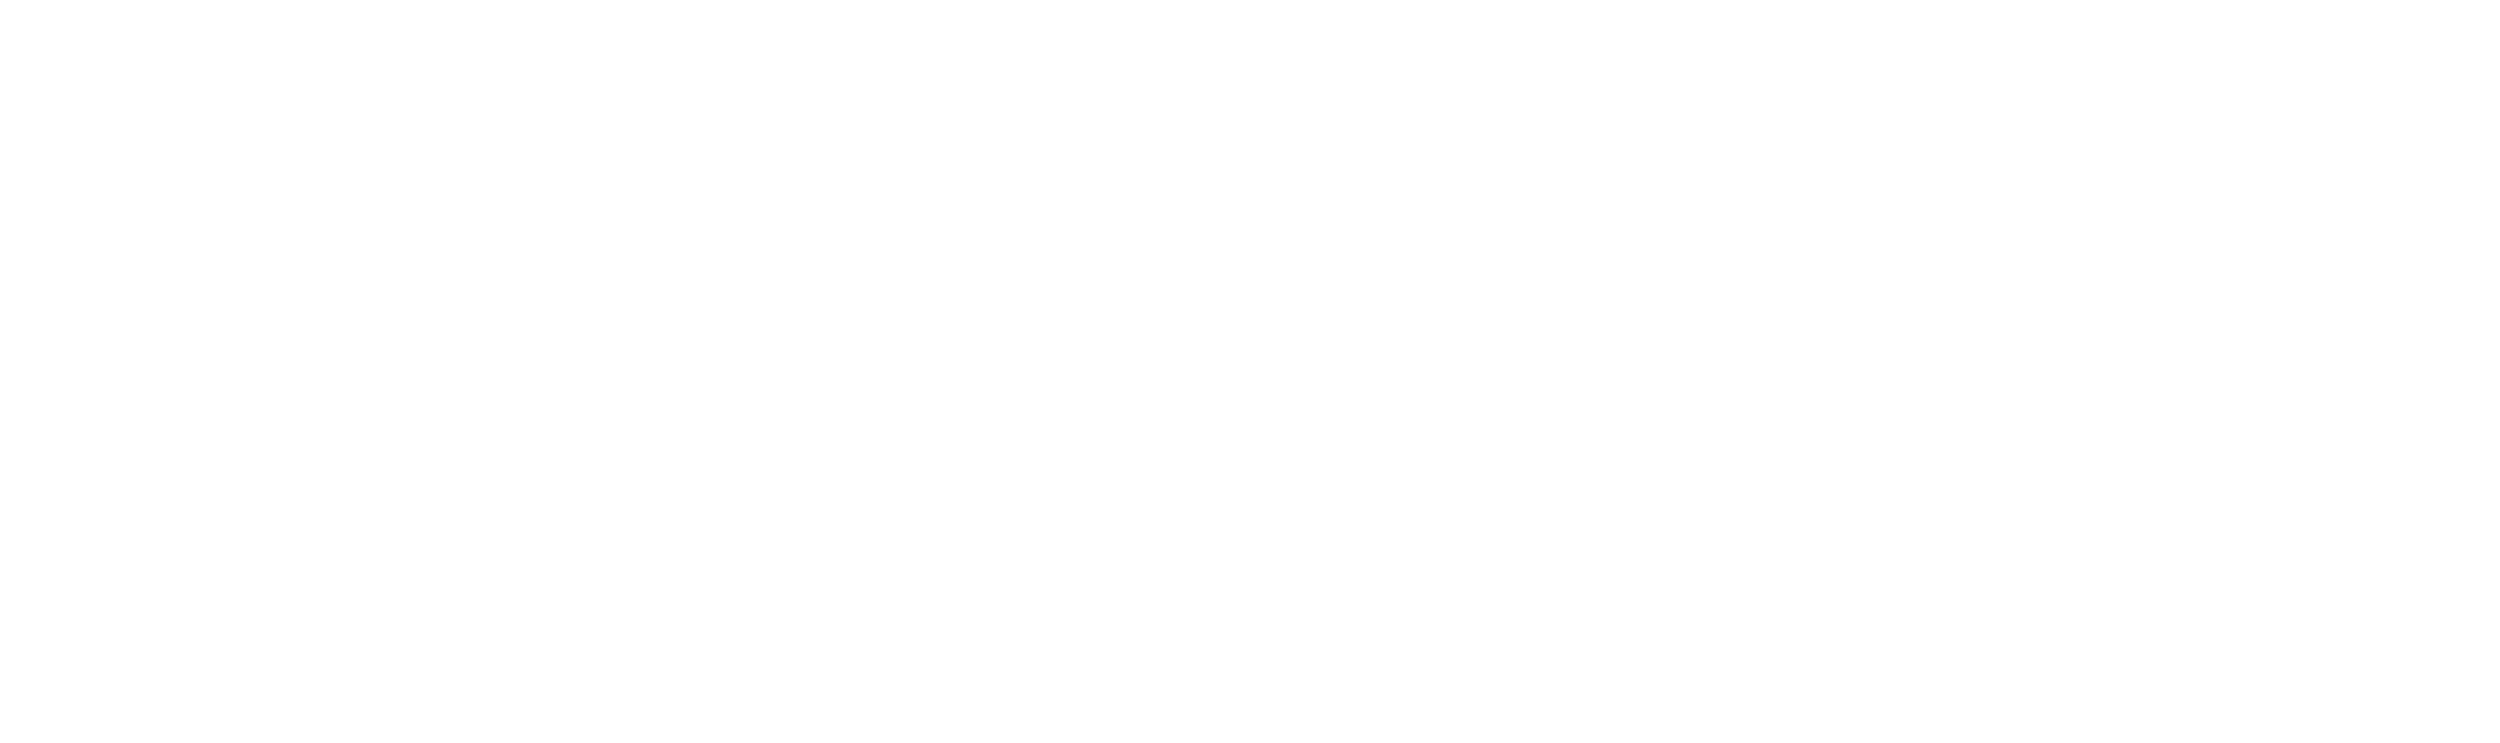 City of Newcastle_Logo_Horizontal_CMYK_City_of_Newcastle_Horizontal_White.png